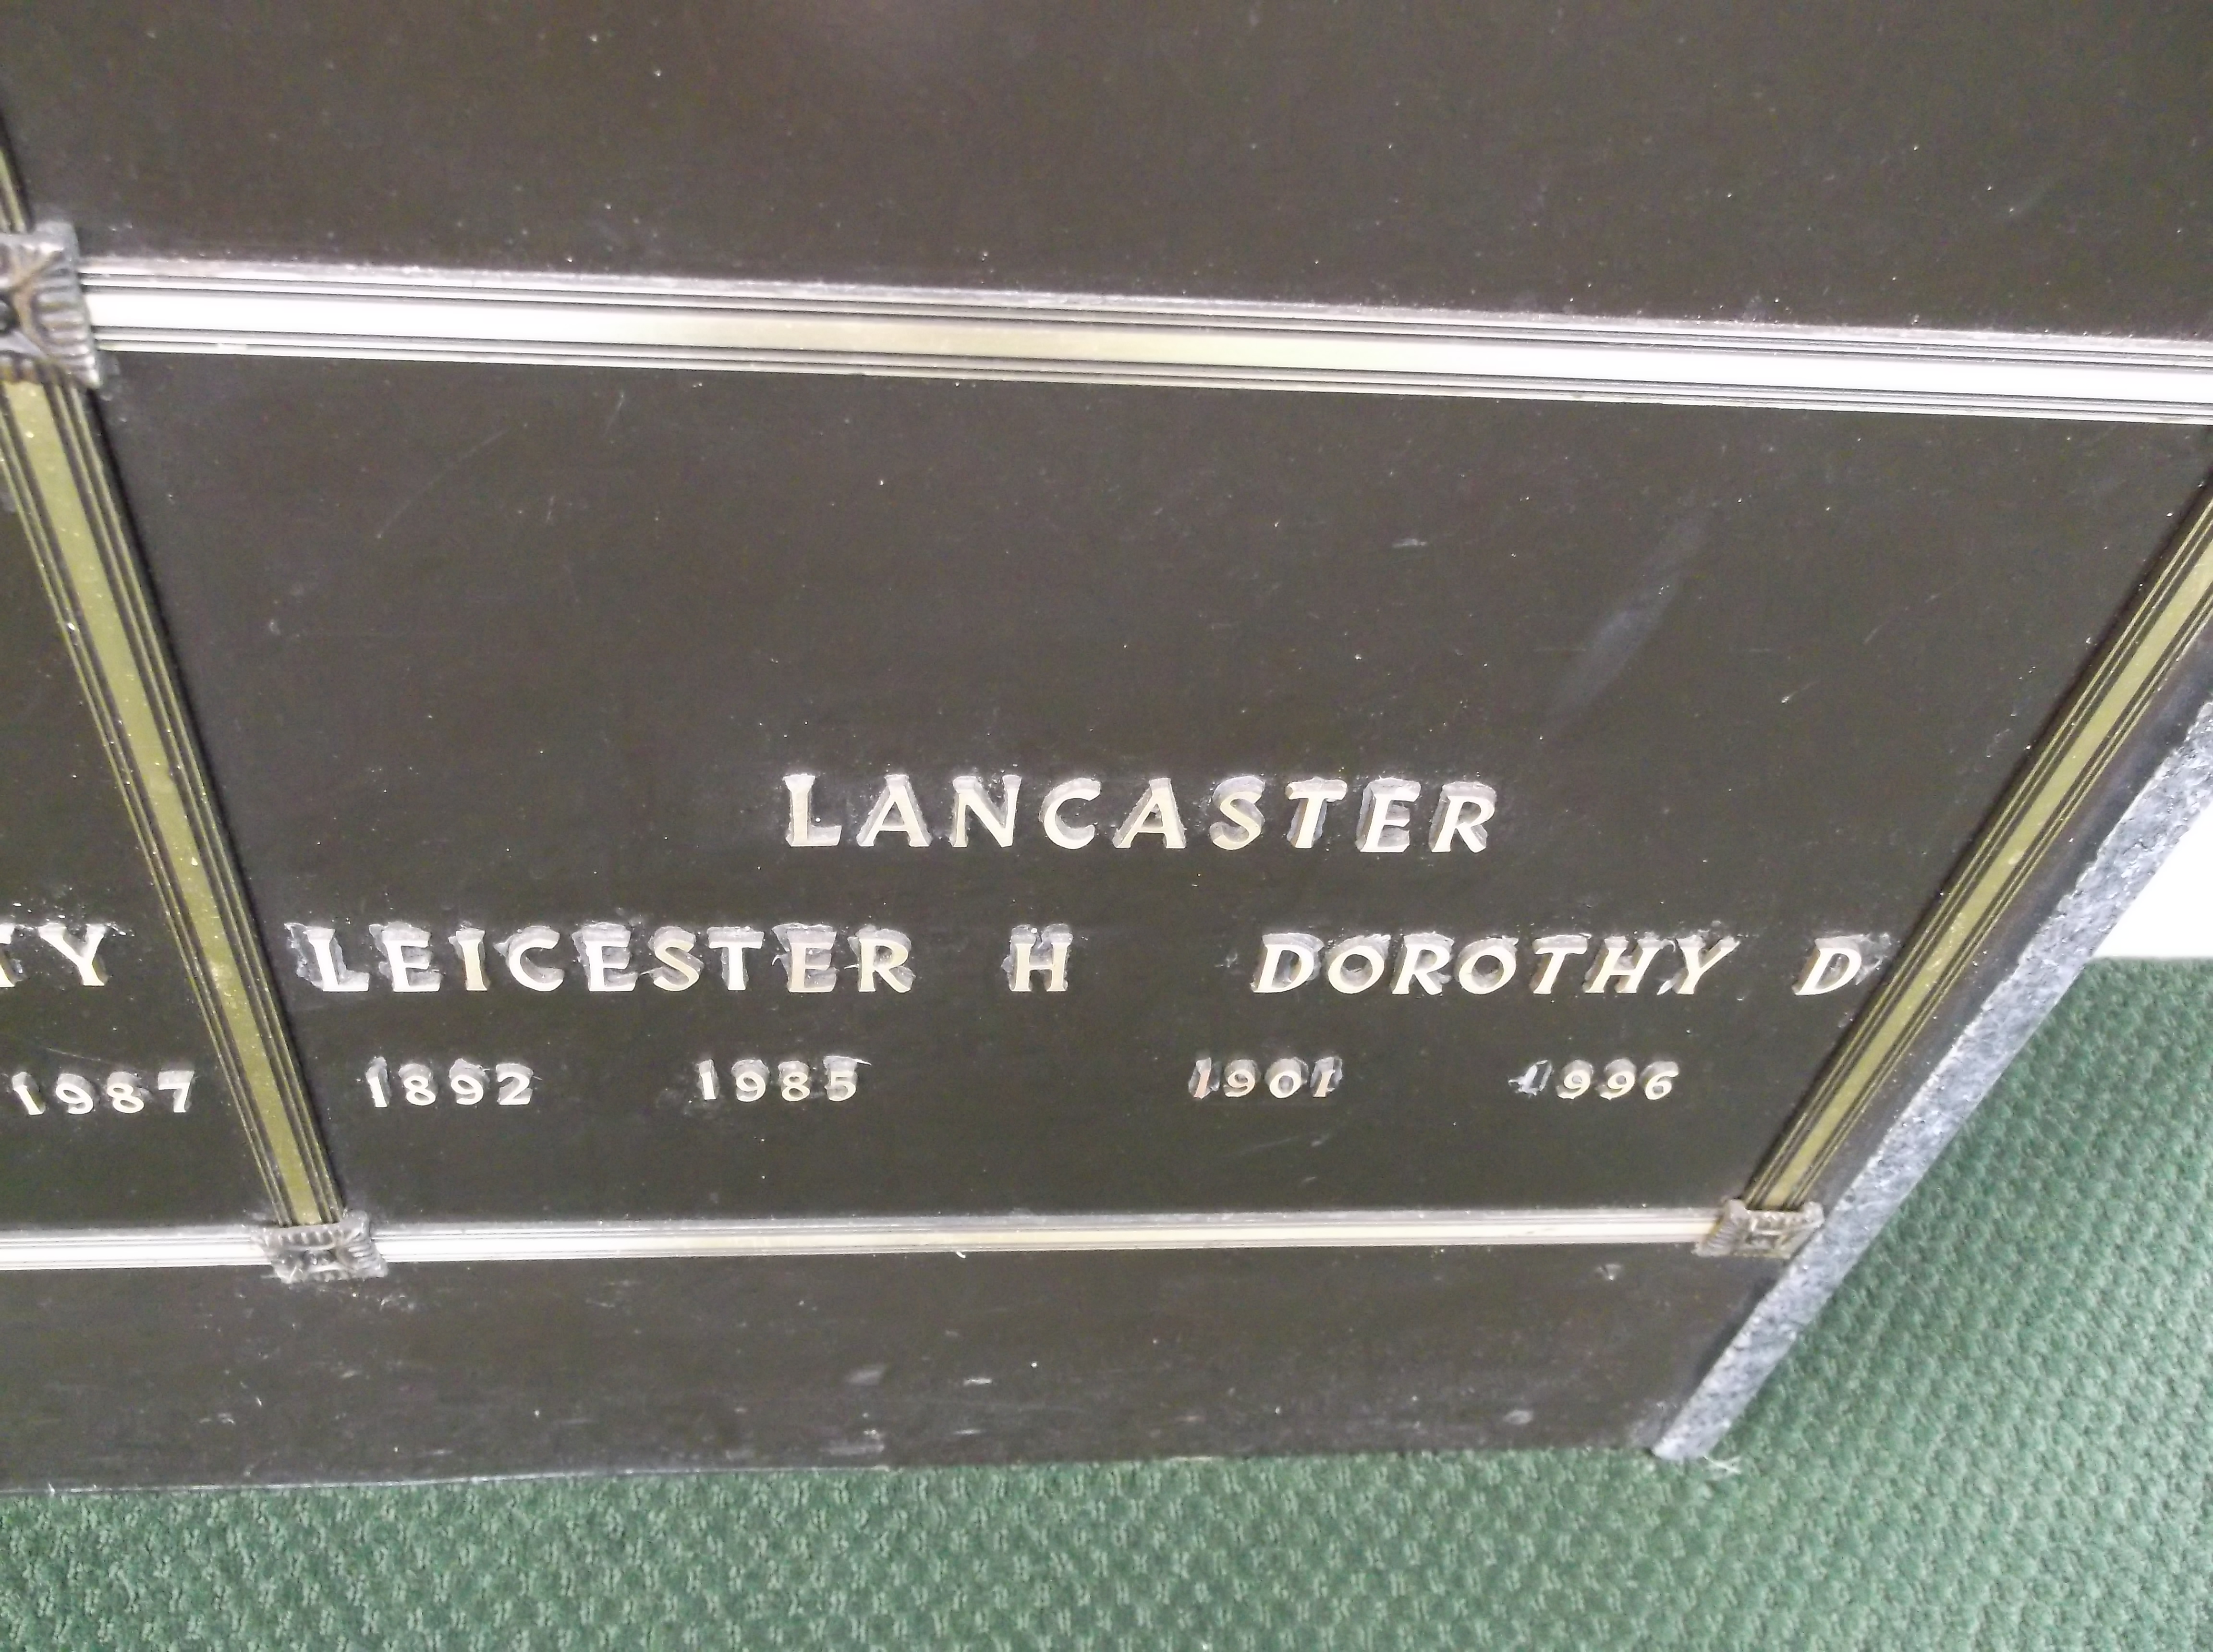 Leicester H Lancaster